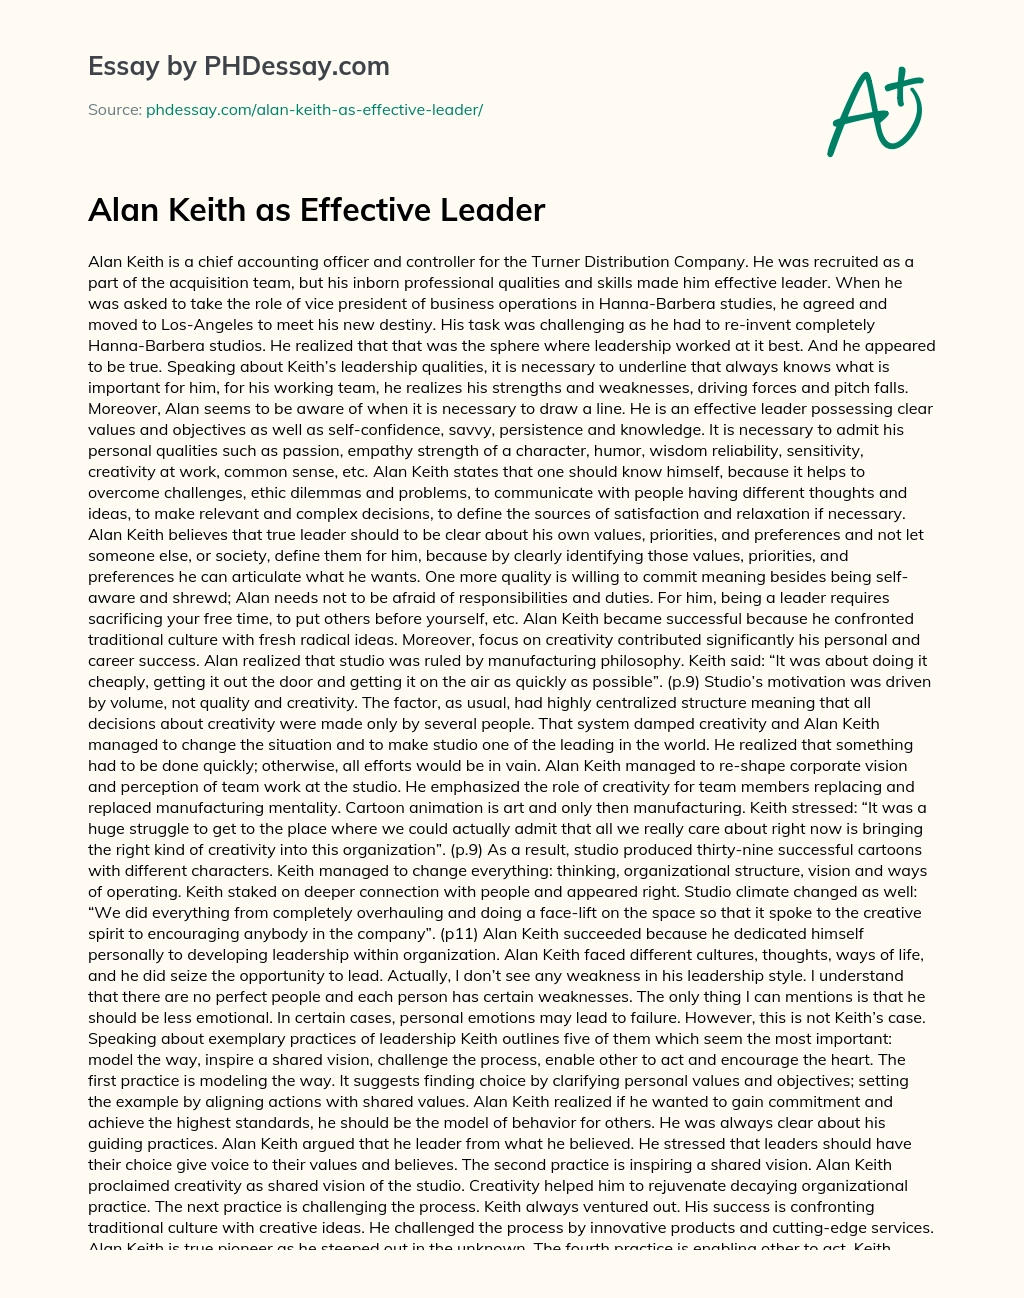 Alan Keith as Effective Leader essay